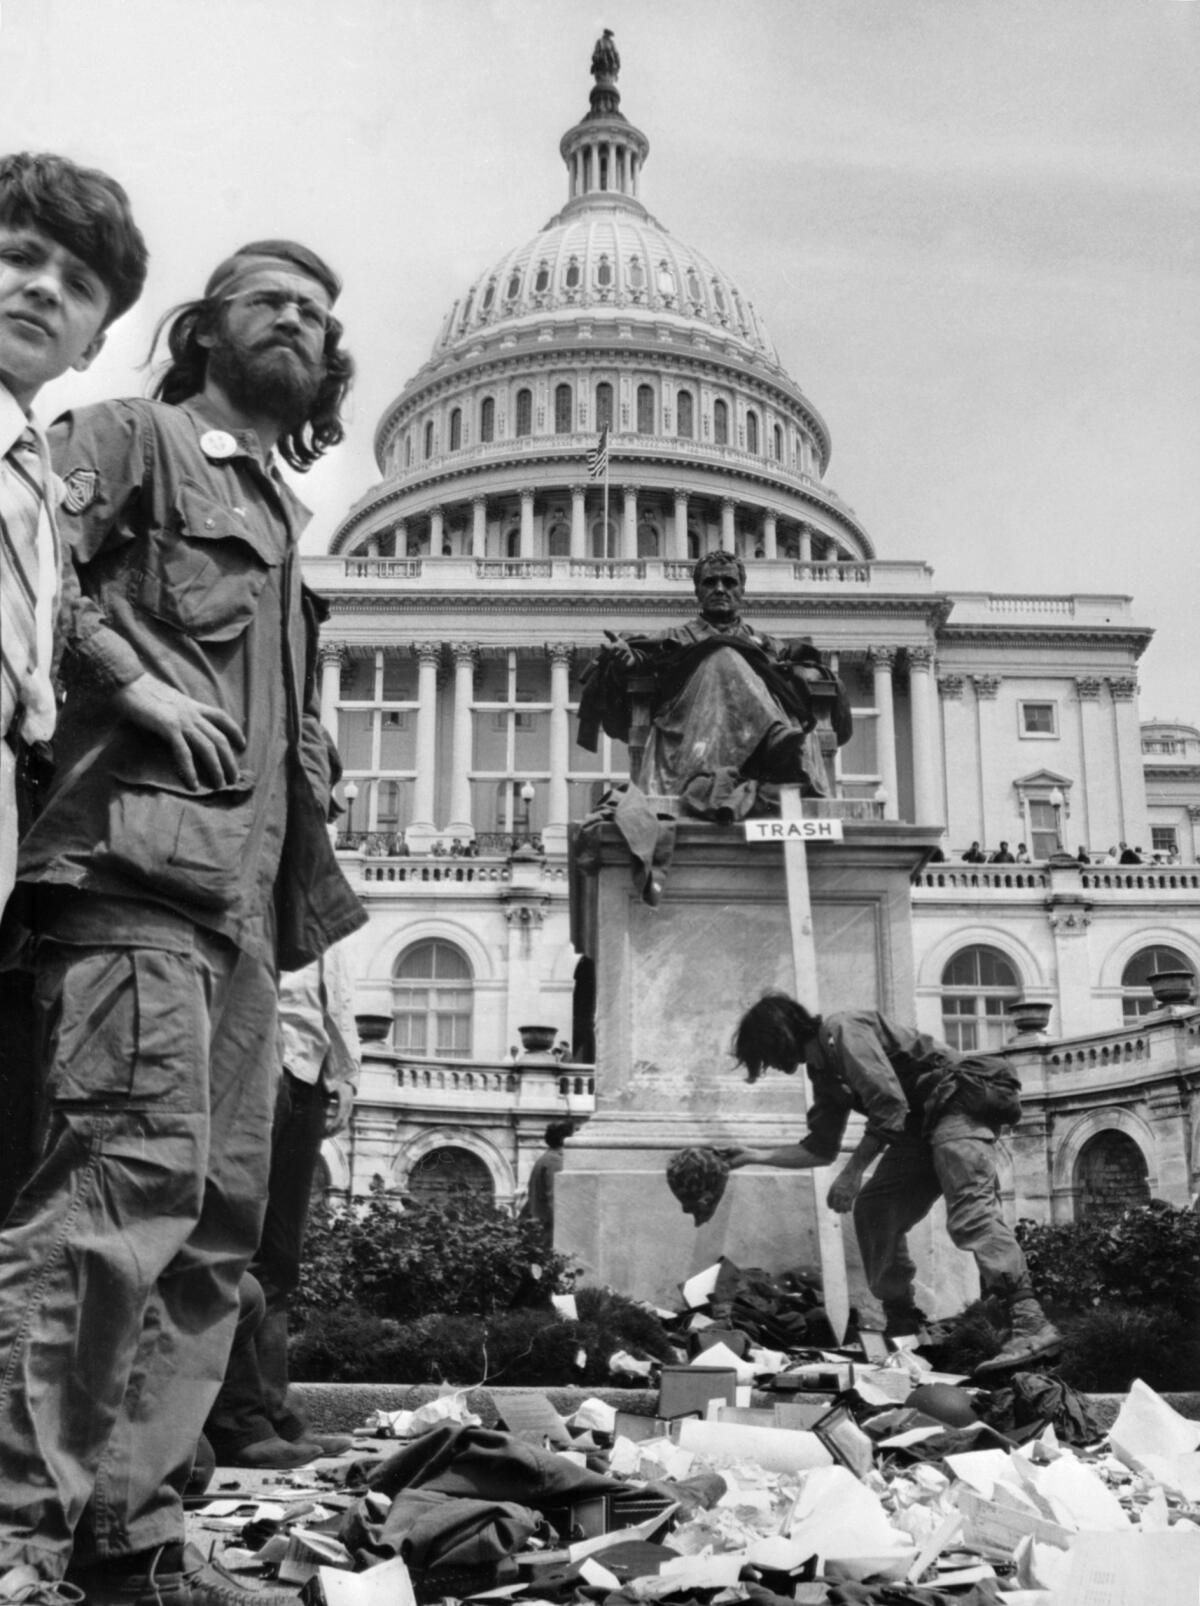 Veterans of the war in Vietnam protesting in Washington on 26 April 1971.